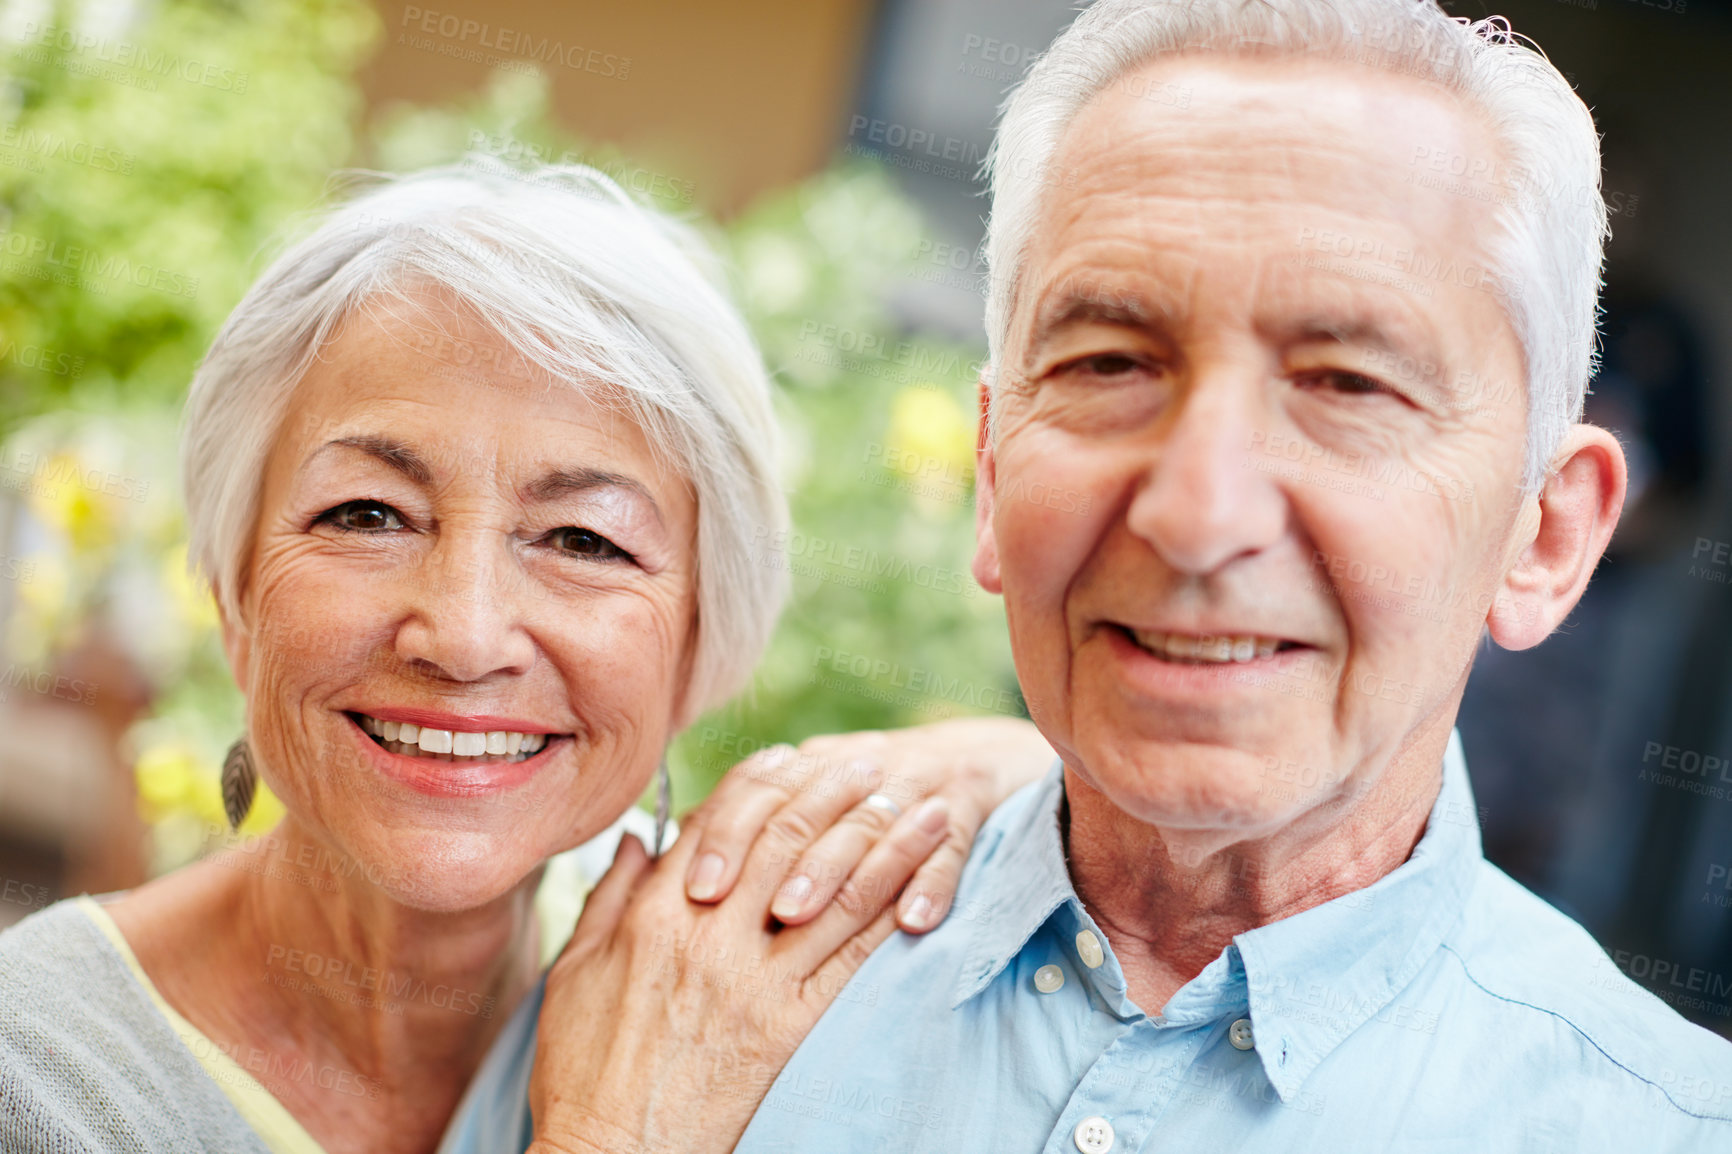 Buy stock photo Portrait of a happy senior couple outdoors